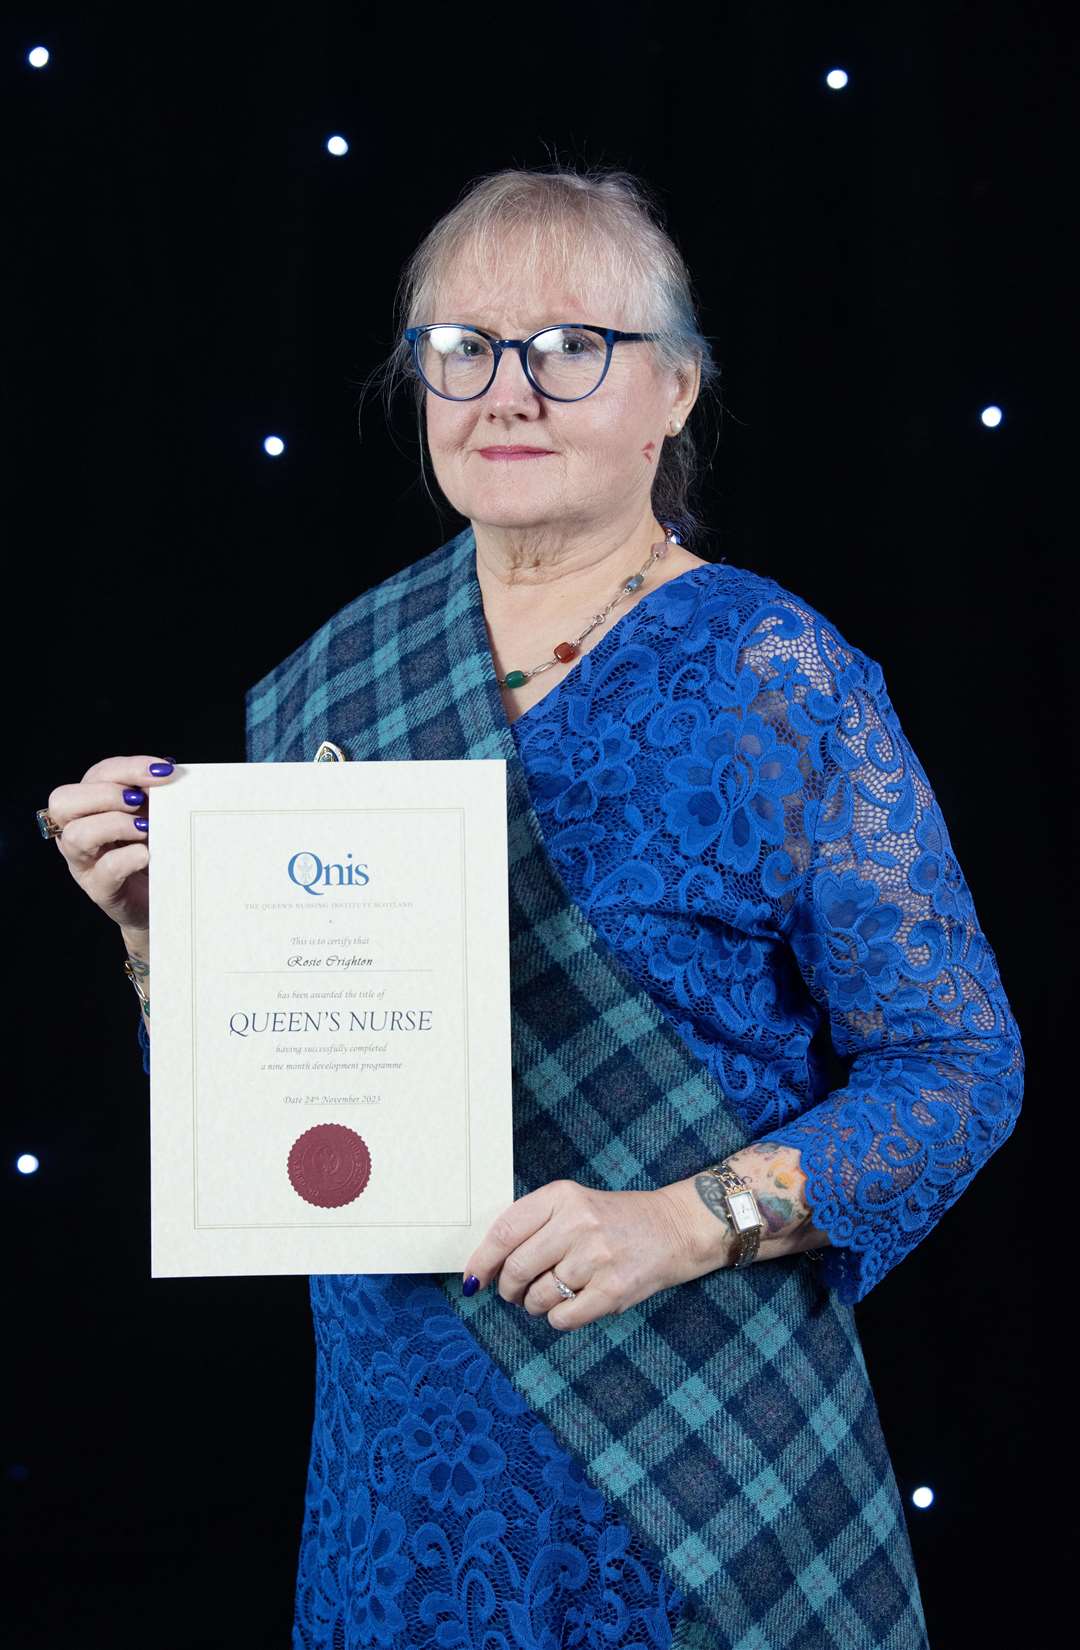 Rosie Crighton has been awarded the prestigious title of Queen’s Nurse.